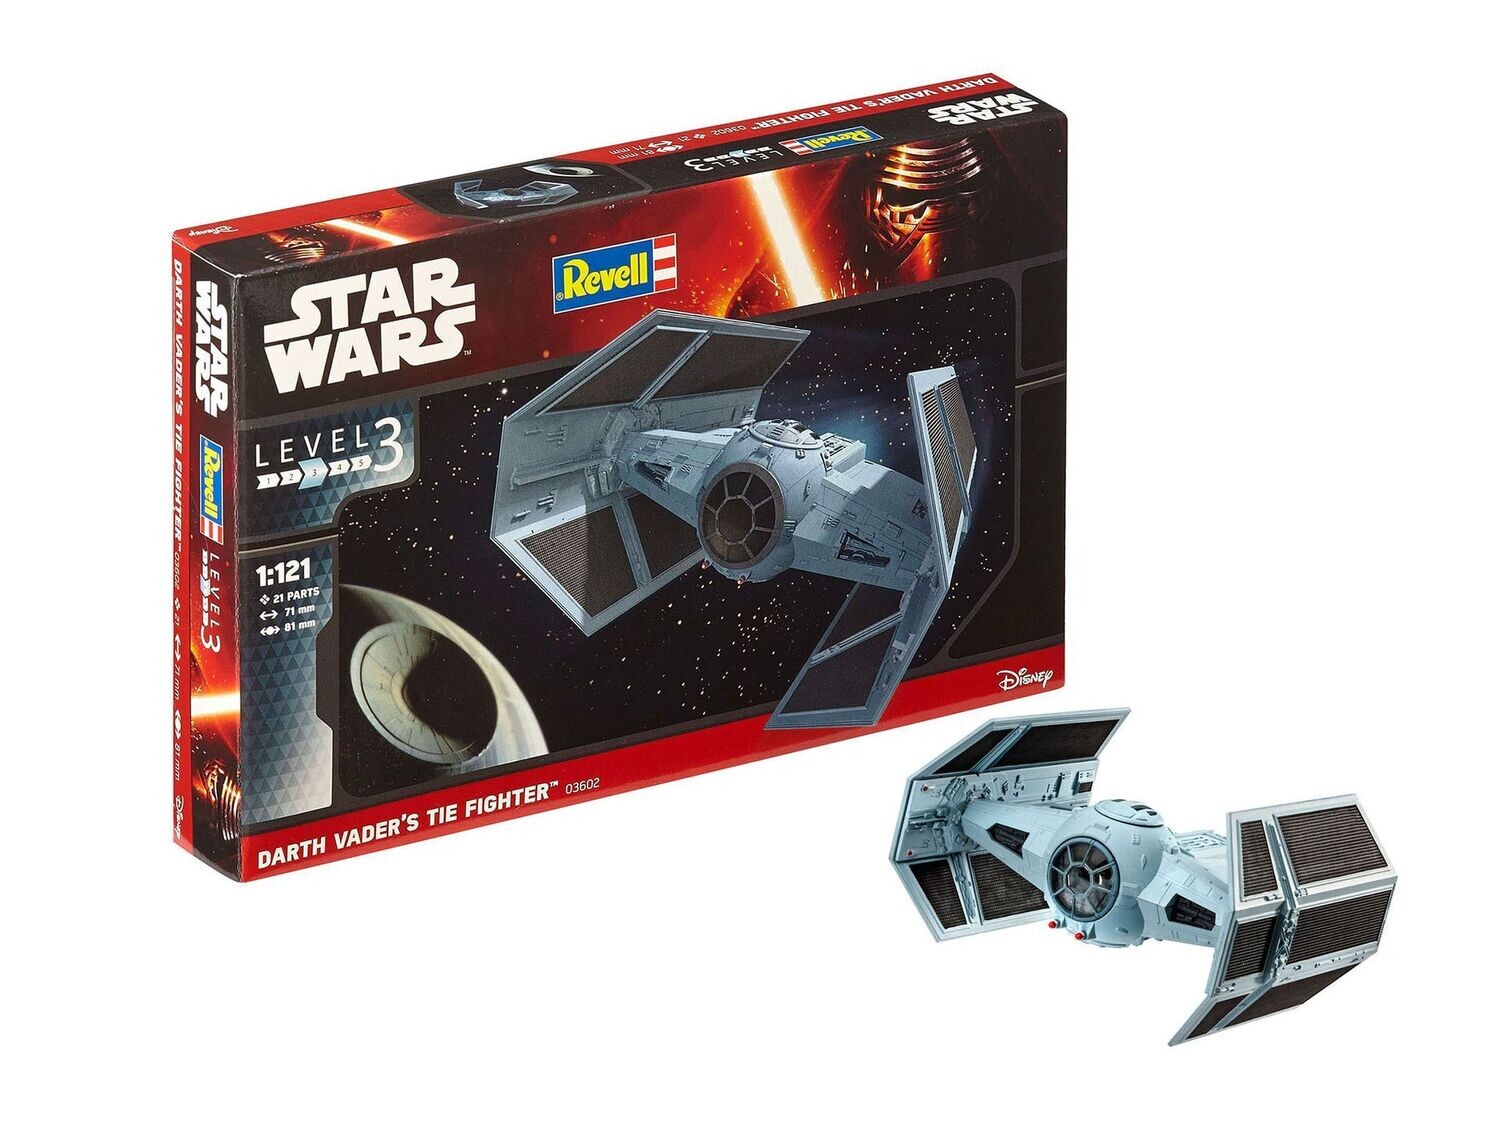 Revell 03602 Star Wars - Darth Vader's Tie Fighter 1:121 Scale Plastic Model Kit